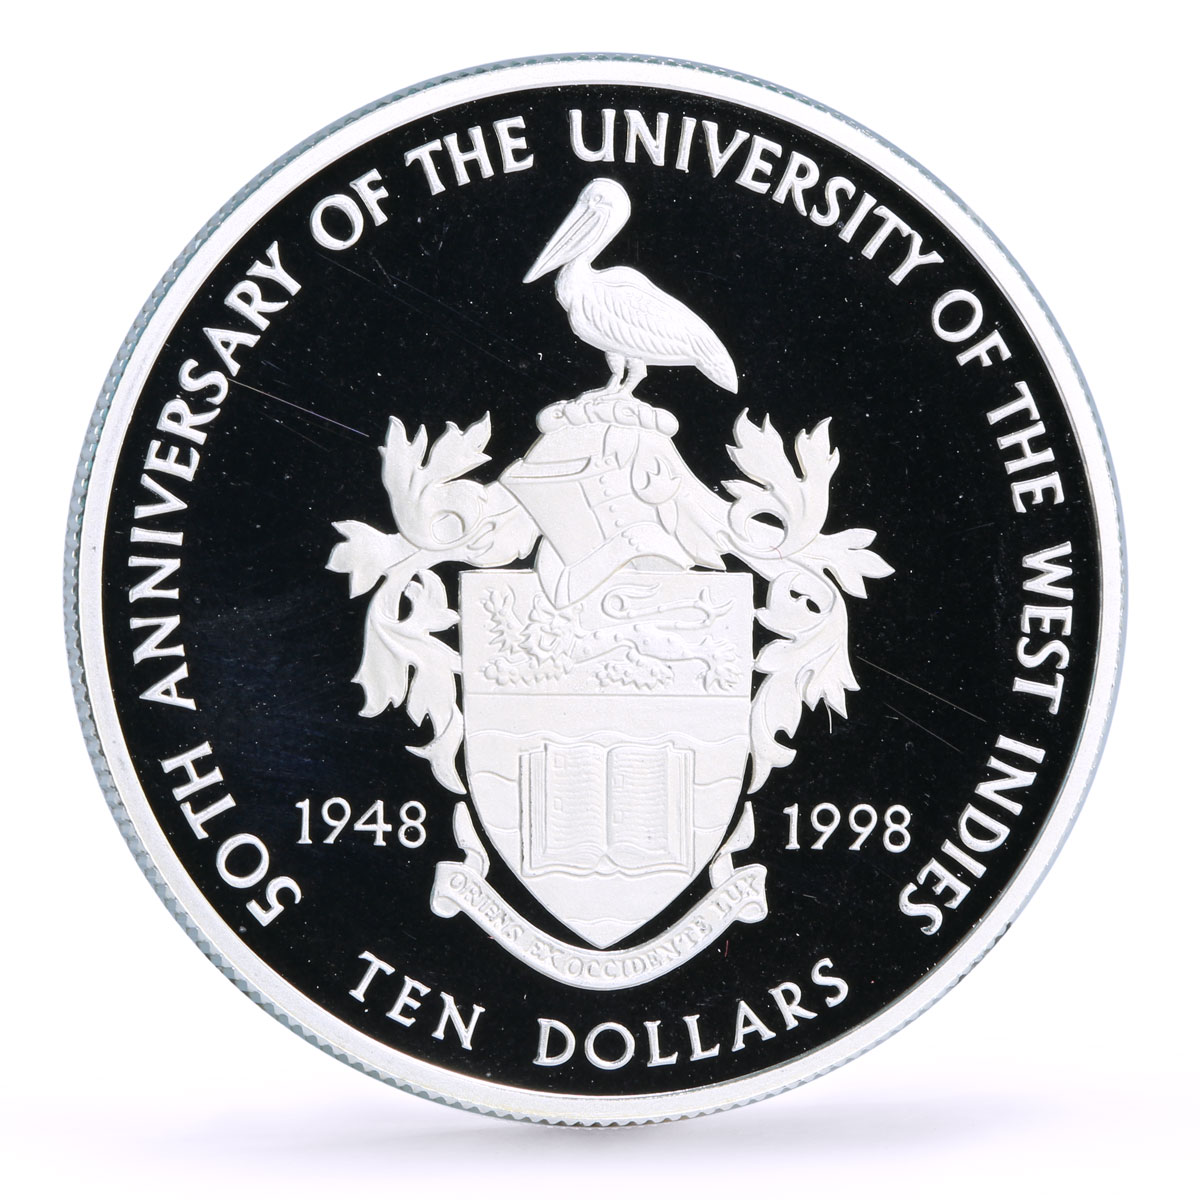 Bahamas 10 dollars West Indies University Pelican Bird proof silver coin 1998